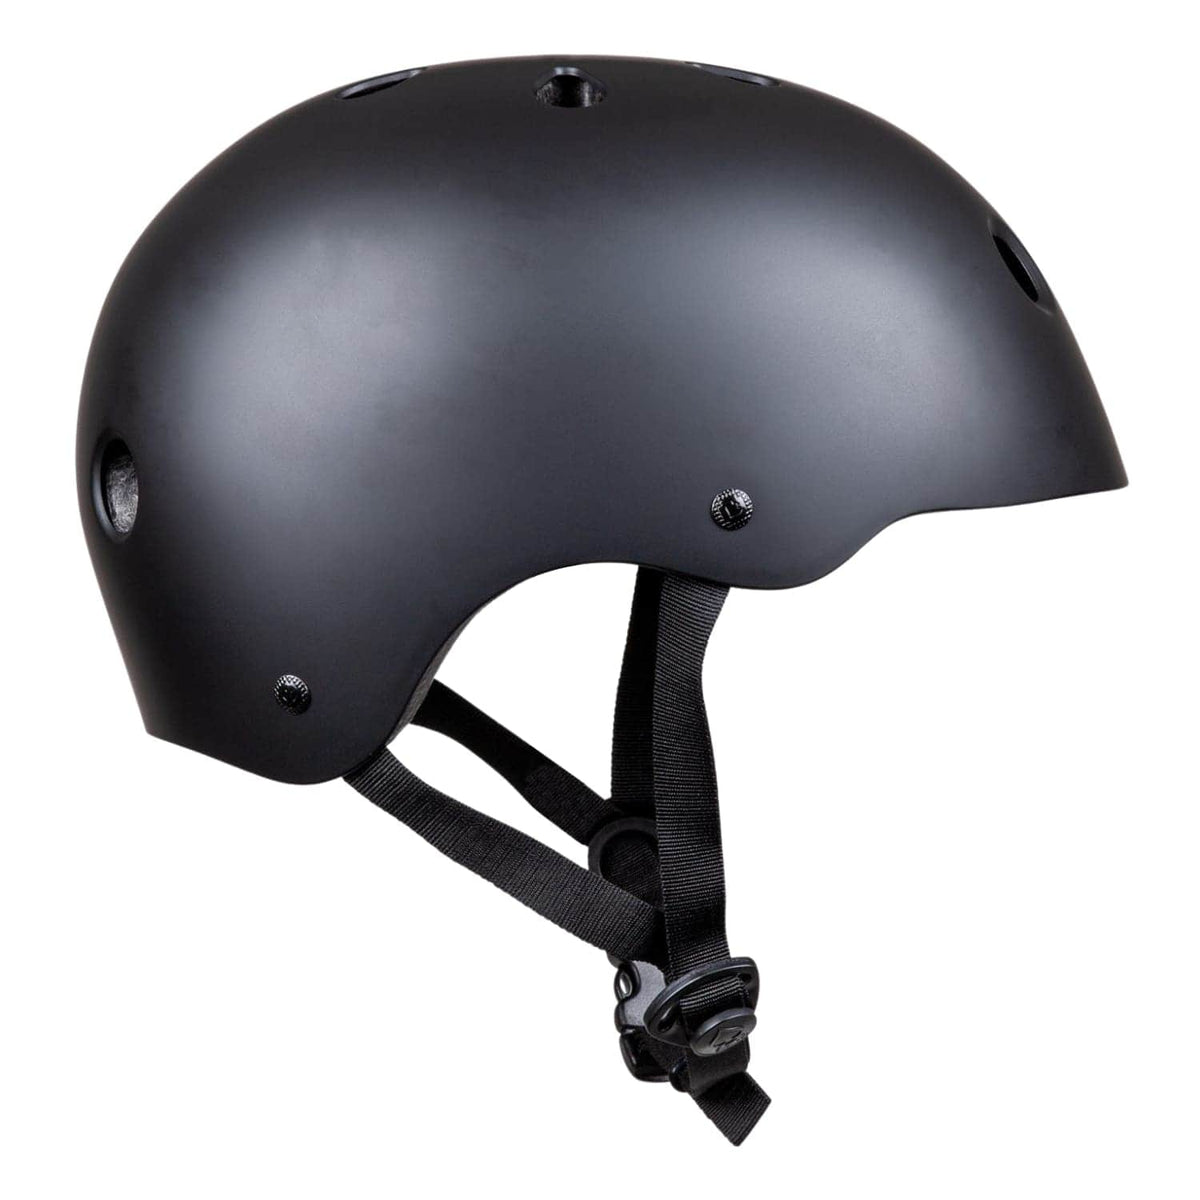 Pro-Tec Prime Helmet Black M/L (56-60cm) - Skateboard Helmet by Pro-Tec